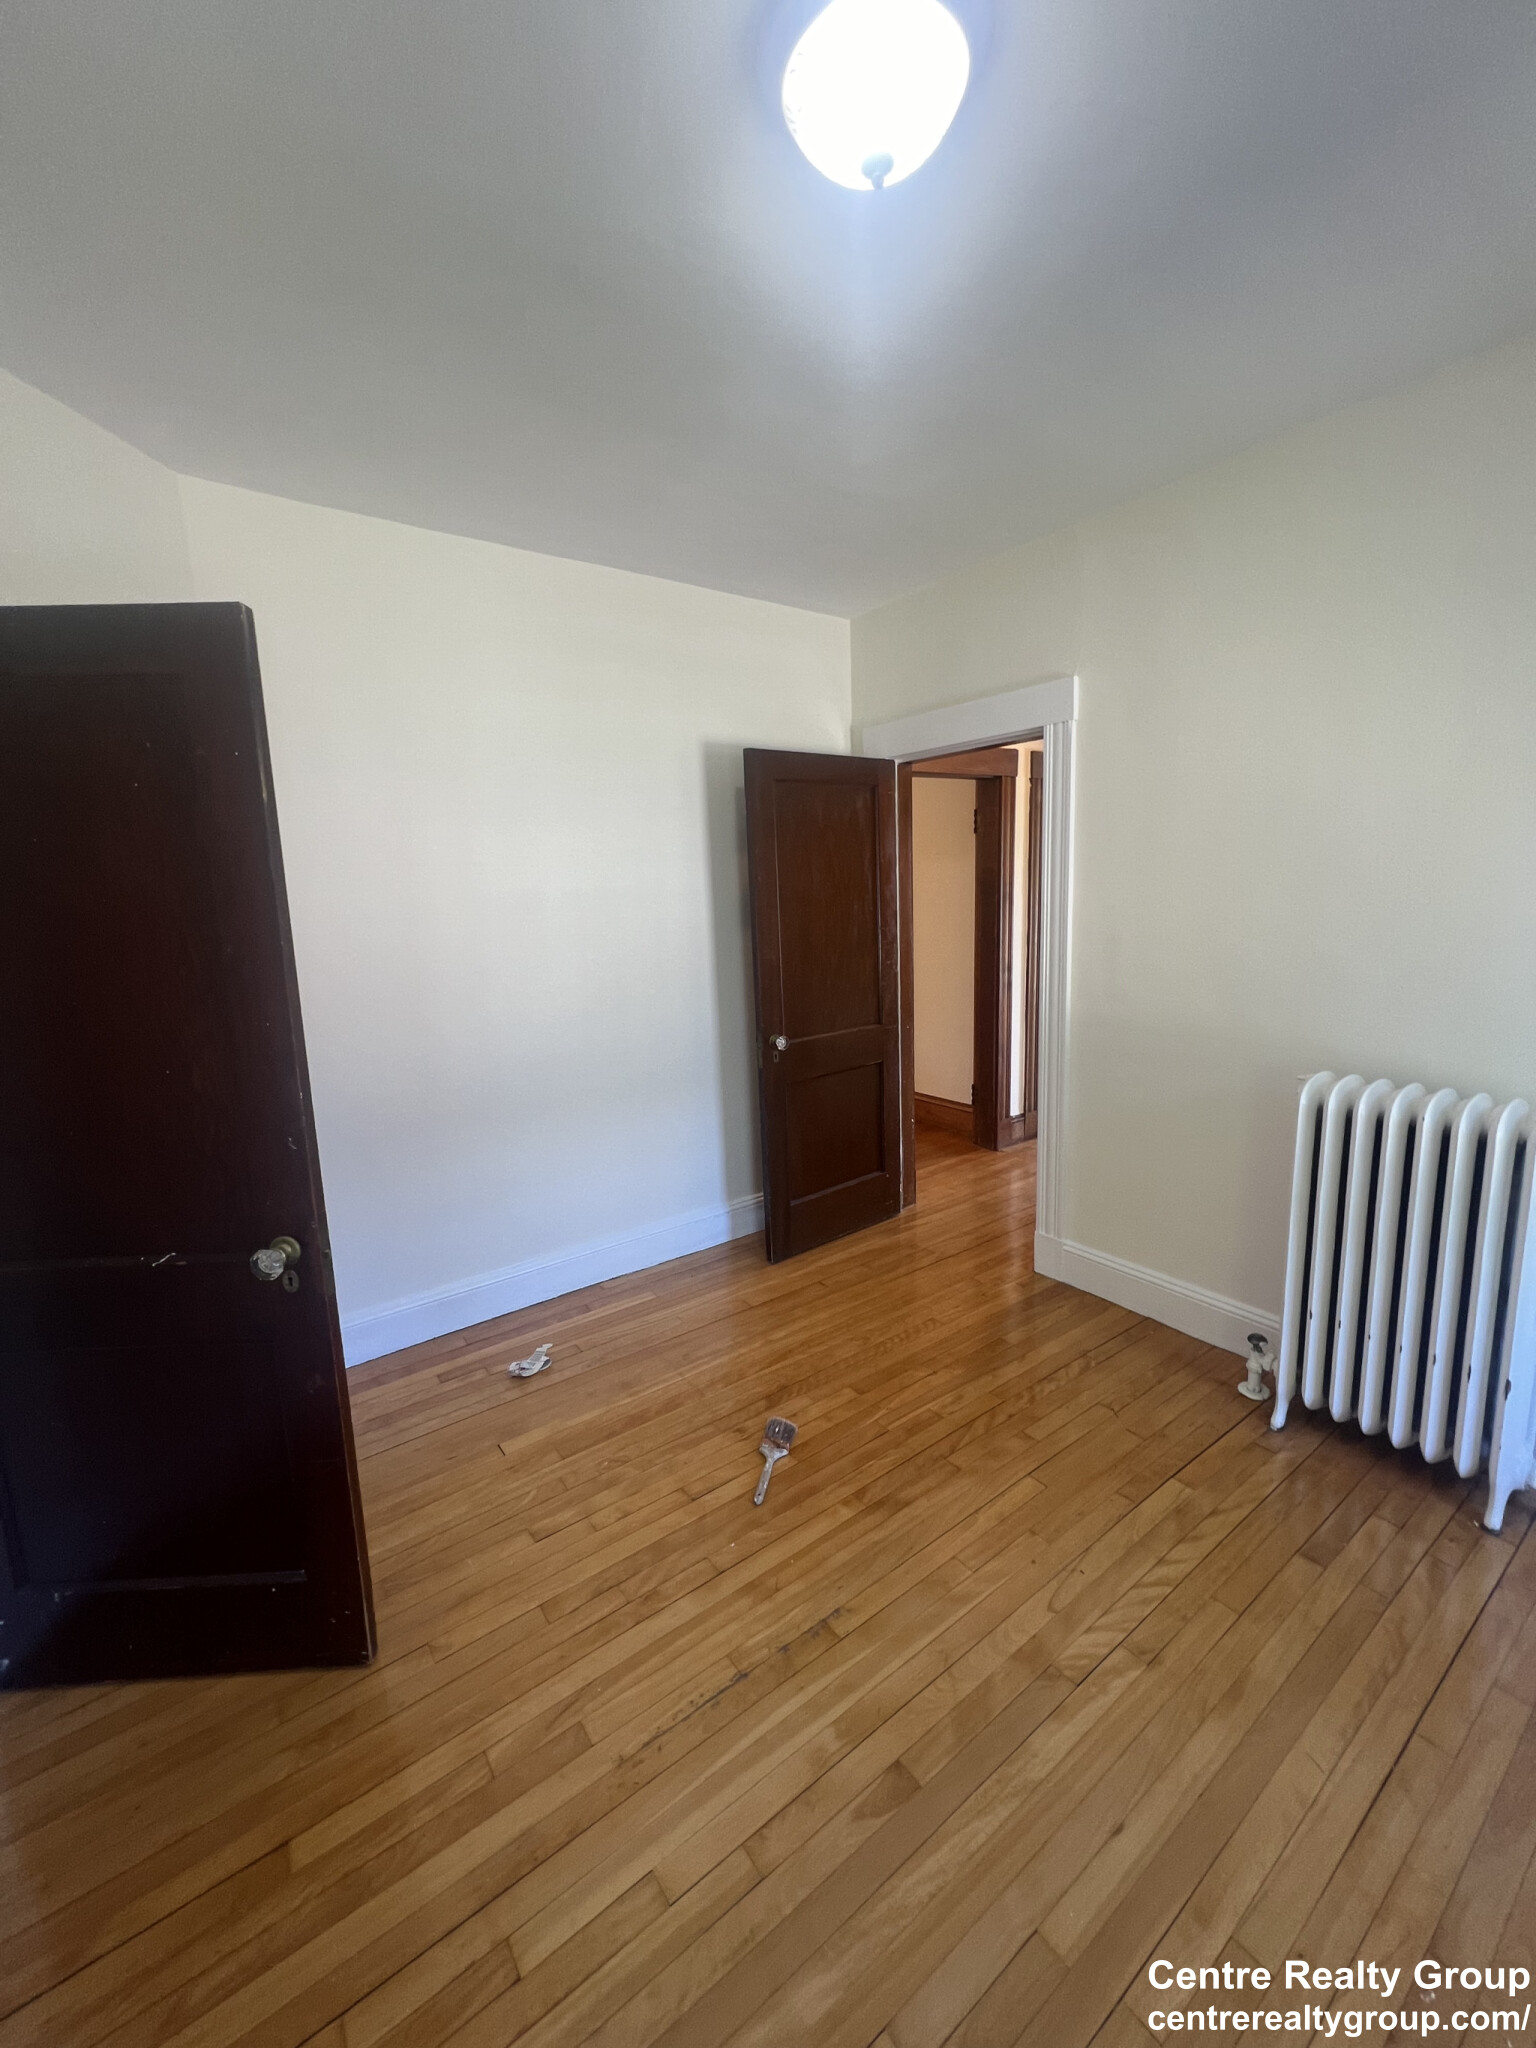 Photos of apartment on Russett Rd.,Boston MA 02132